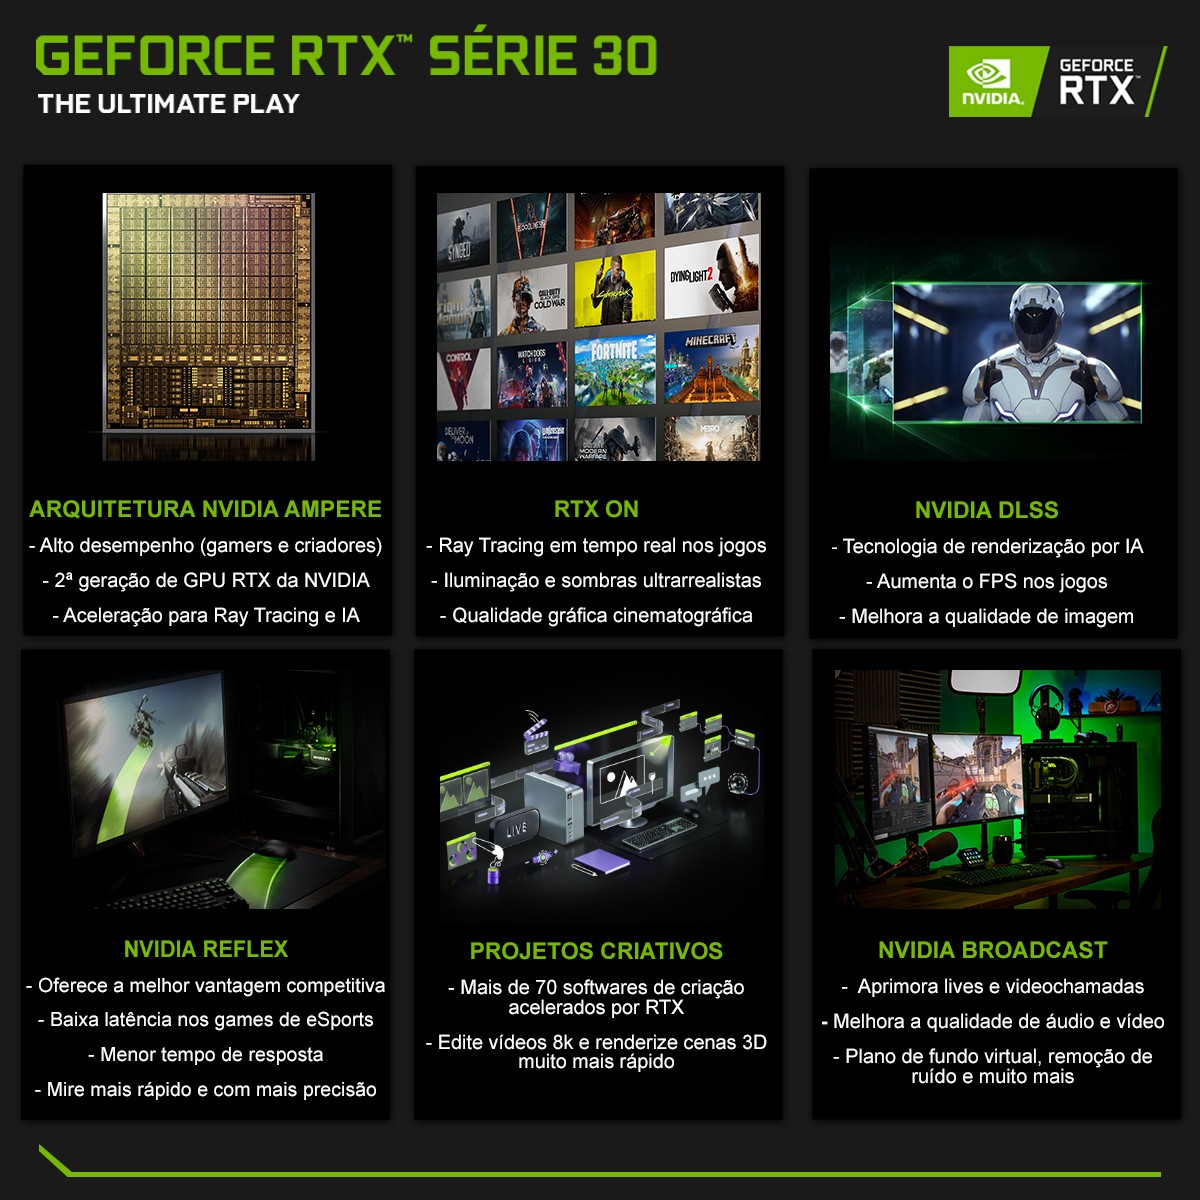 Placa de Vídeo Palit NVIDIA GeForce RTX 3070 GamingPro LHR, 8GB GDDR6, DLSS, Ray Tracing, NE63070019P2-1041A